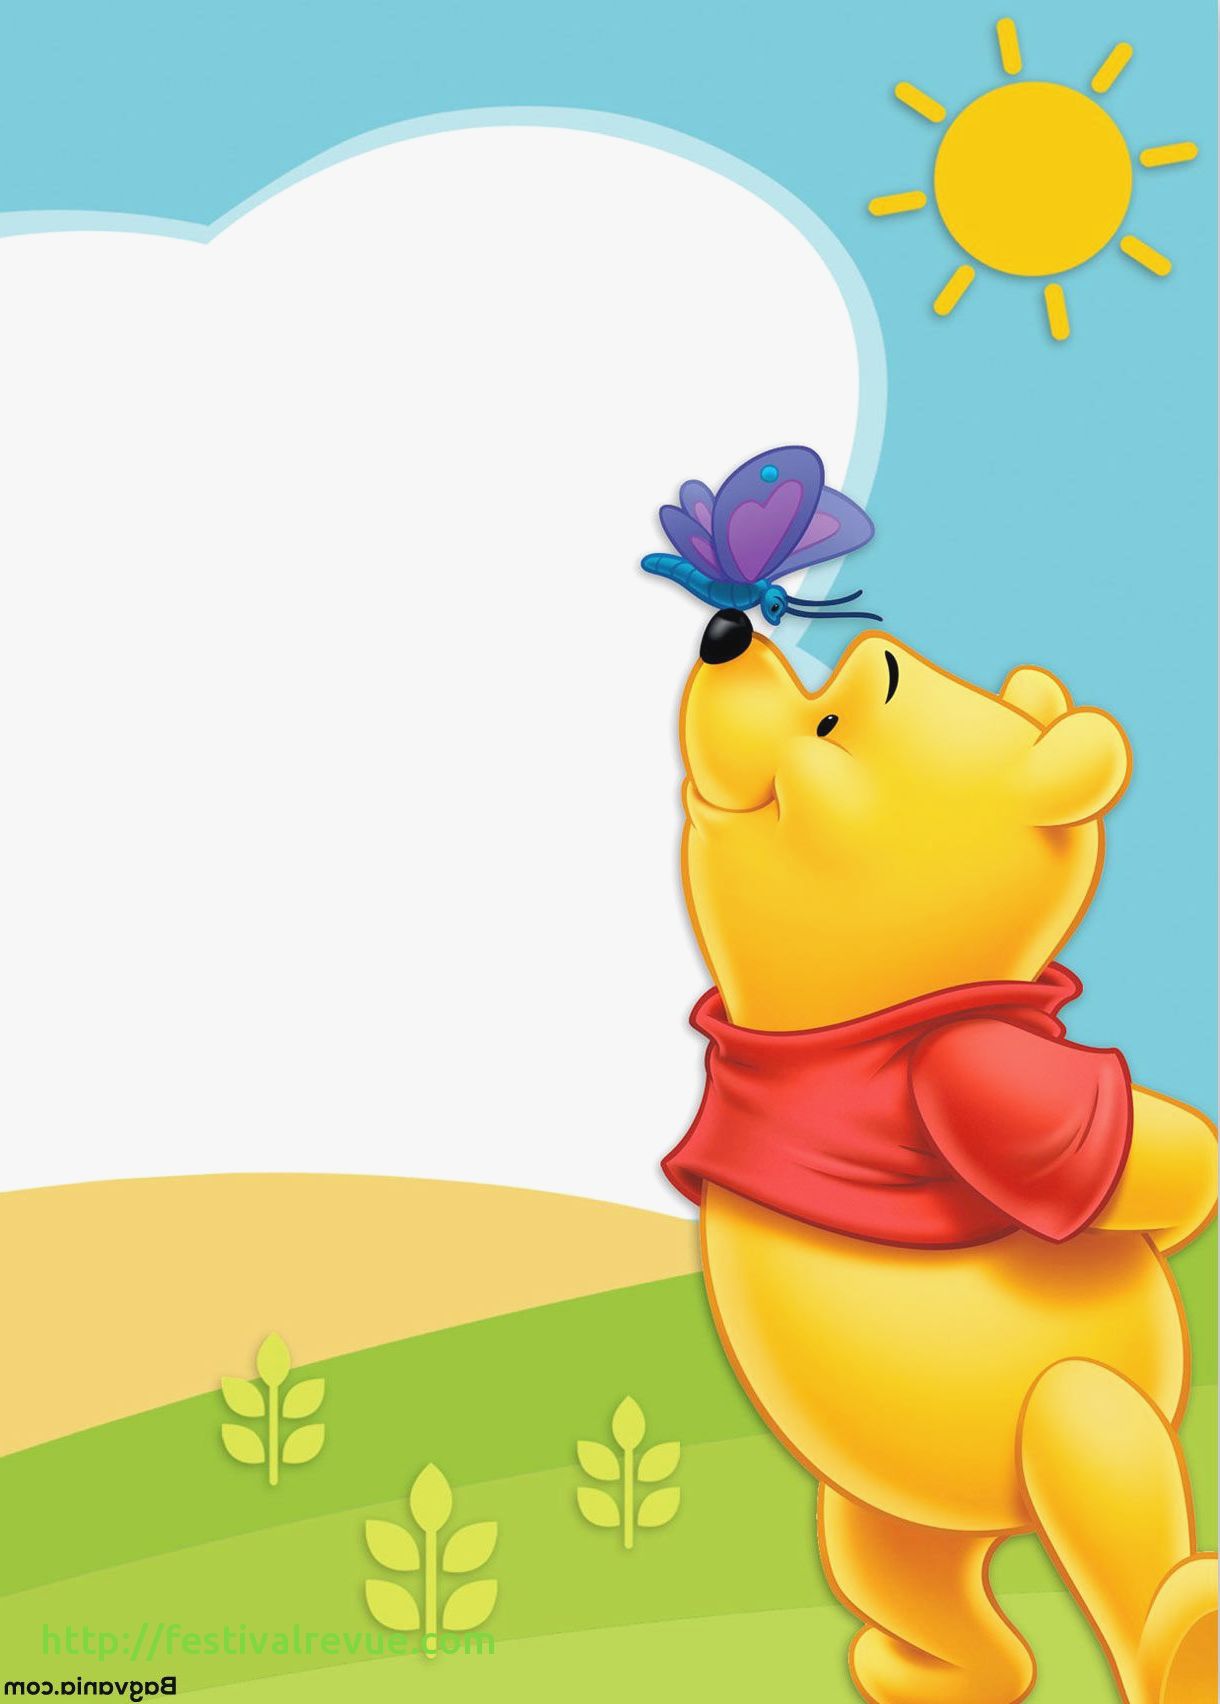 Download Wallpaper Winnie The Pooh